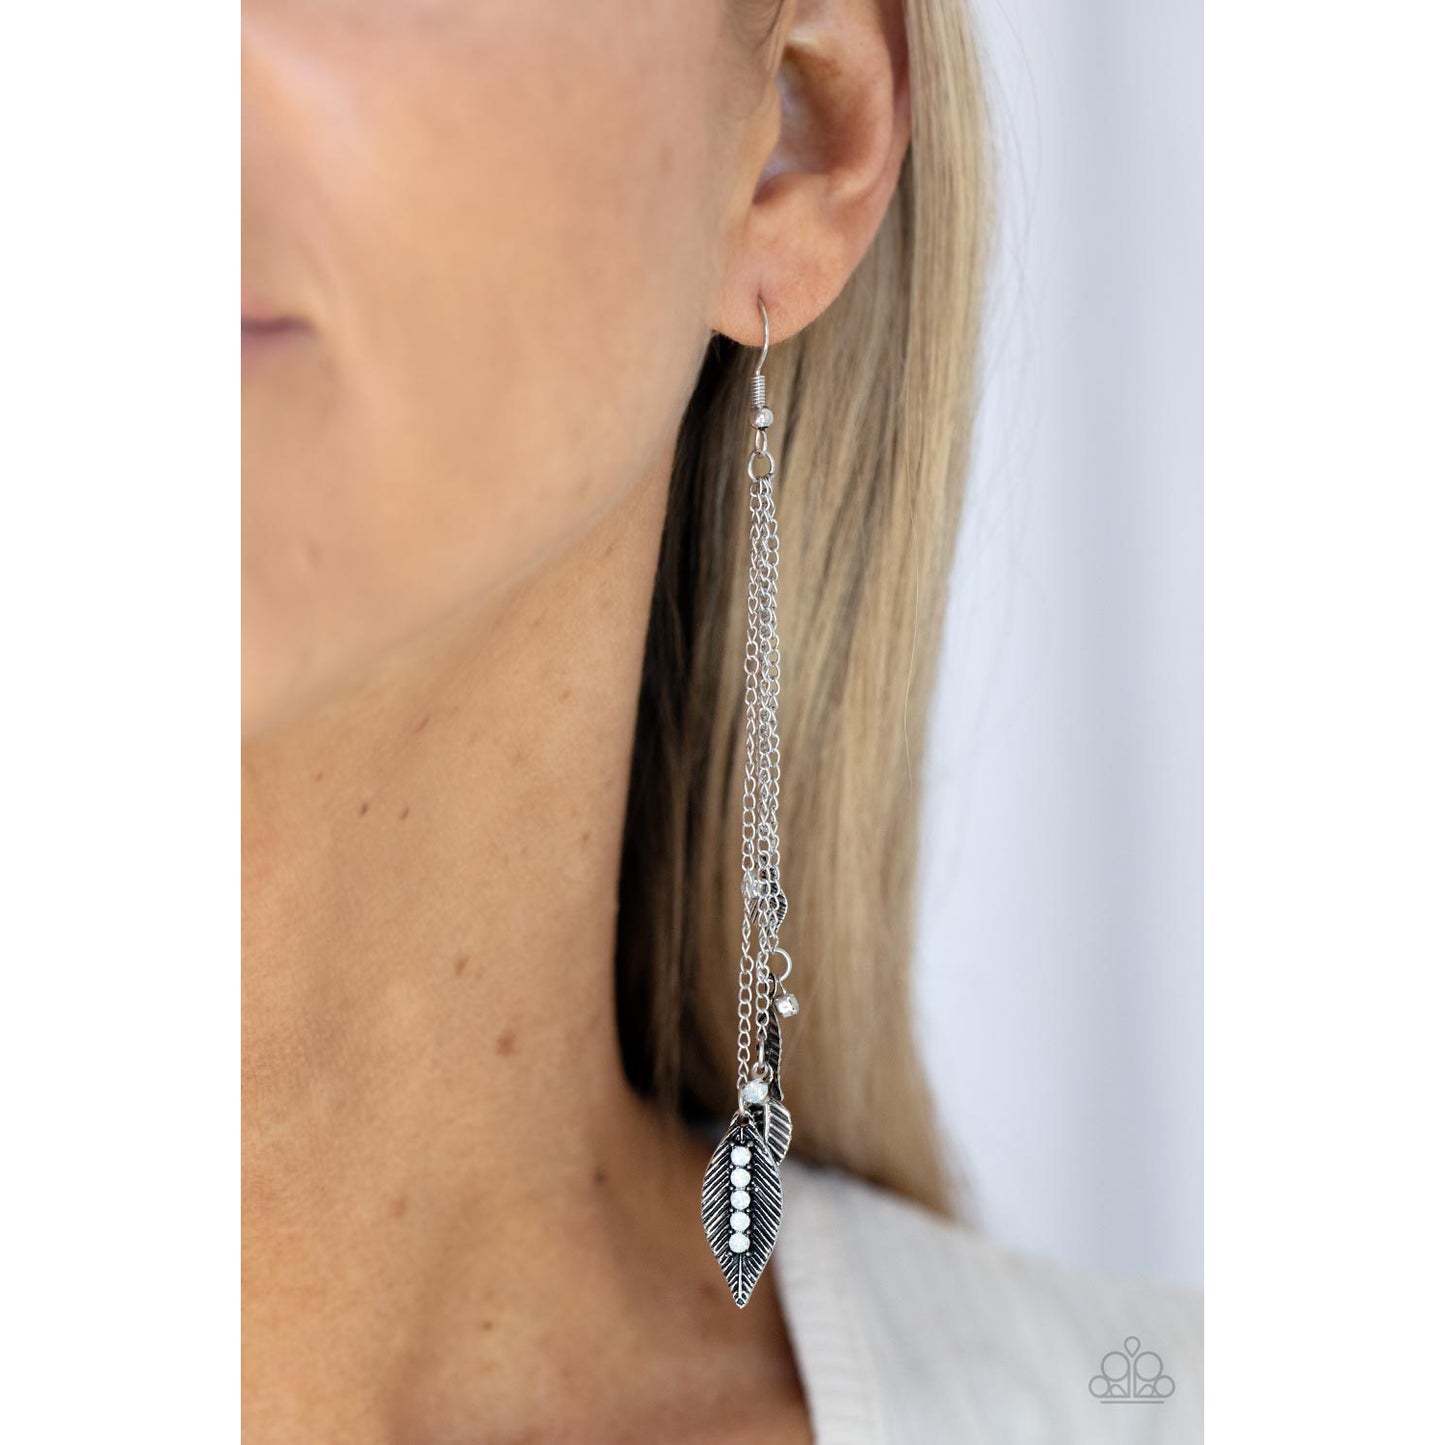 Chiming Leaflets - White Rhinestone Earrings - Paparazzi Accessories - GlaMarous Titi Jewels